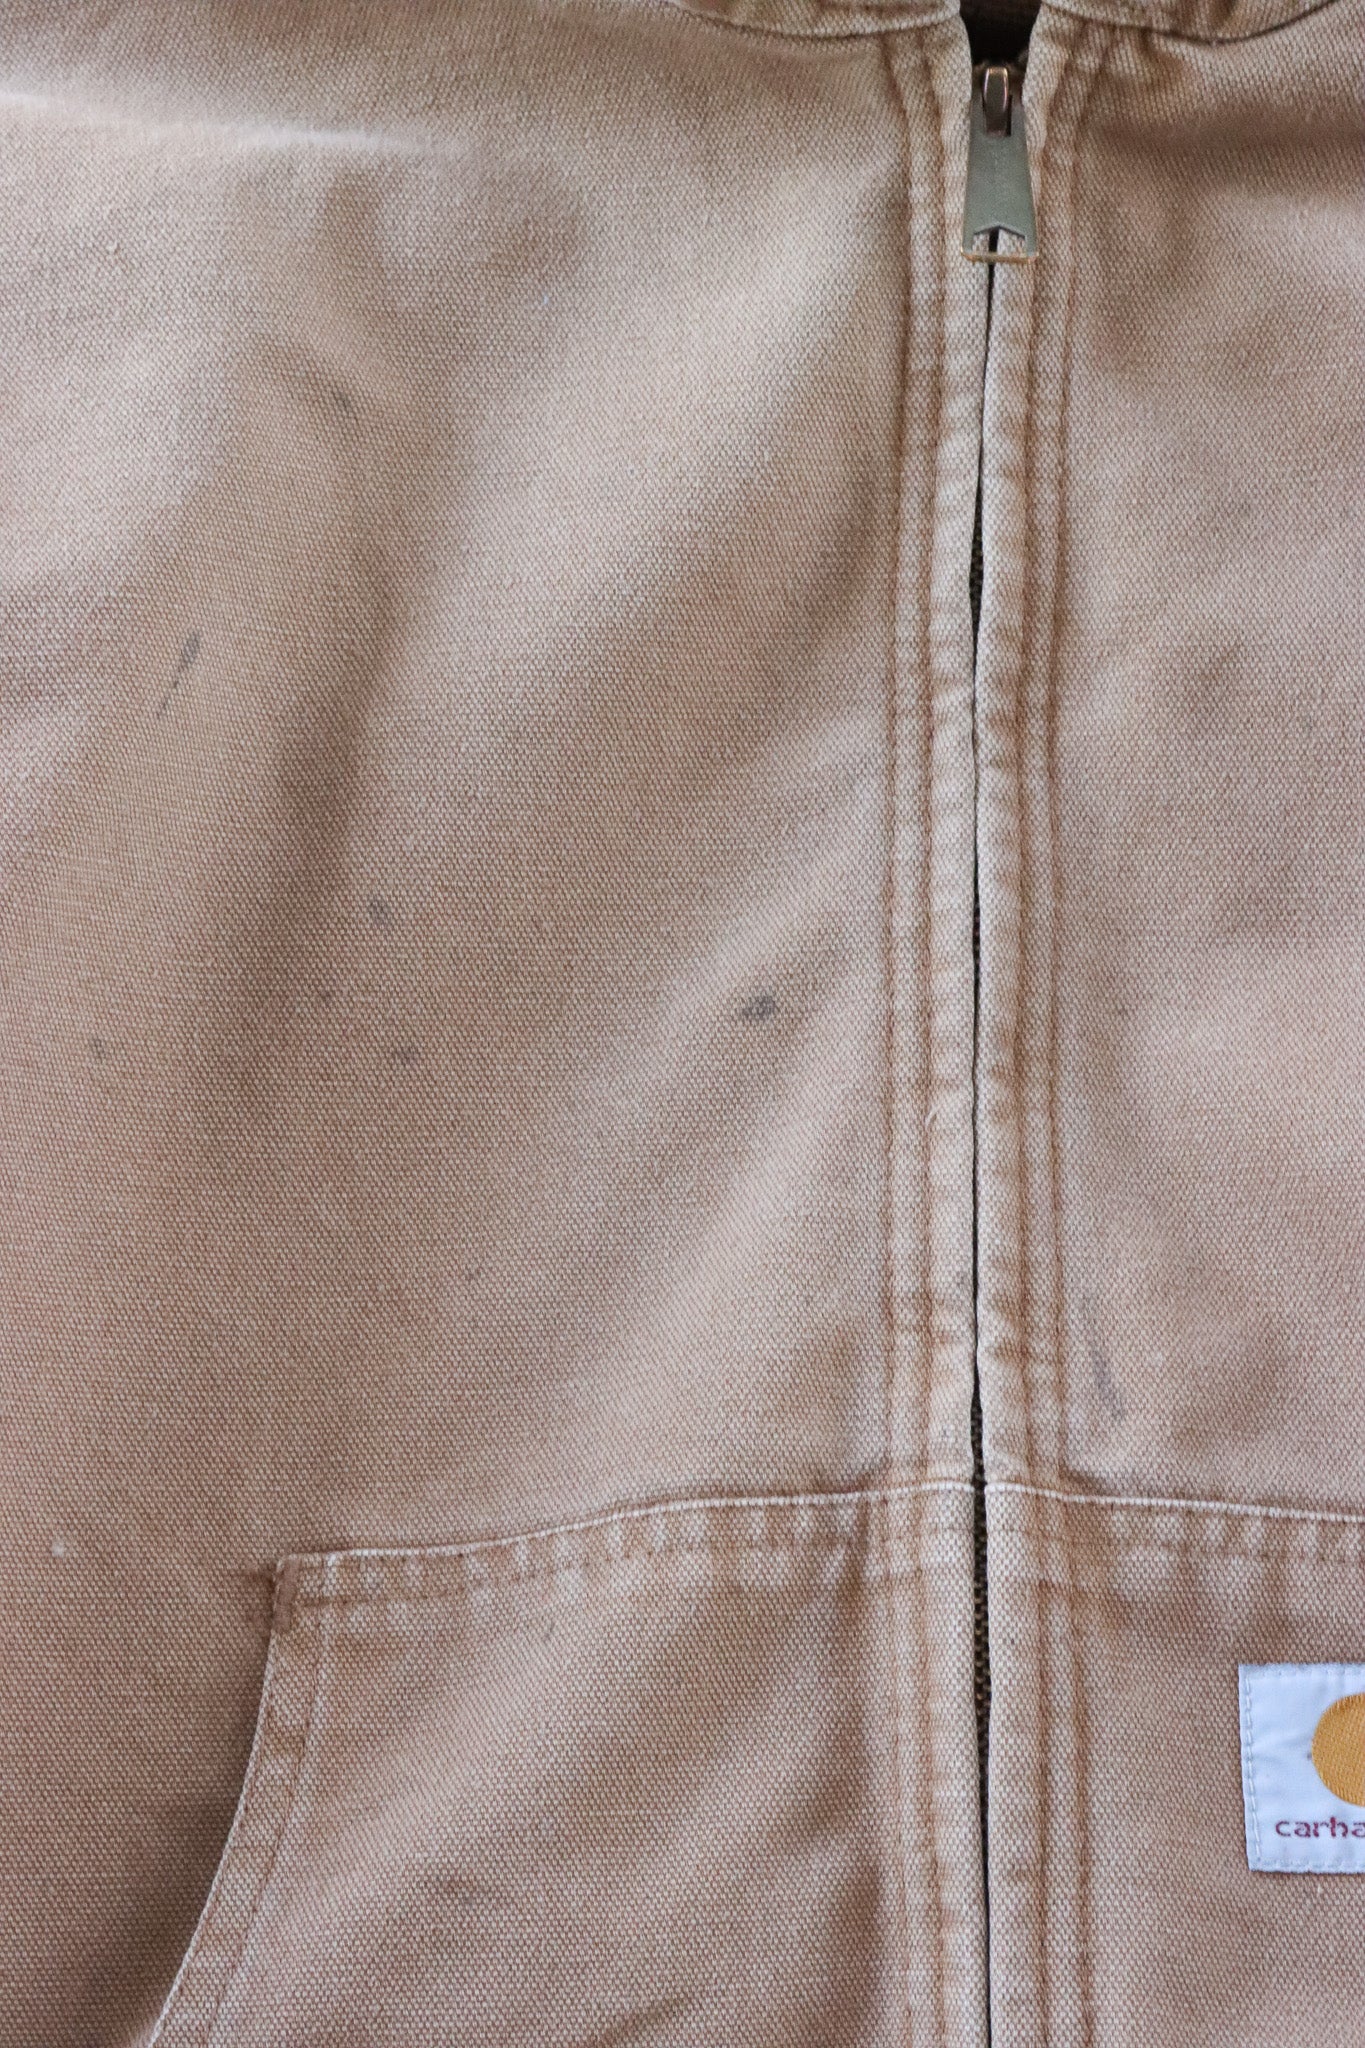 Vintage Carhartt Jacket Small